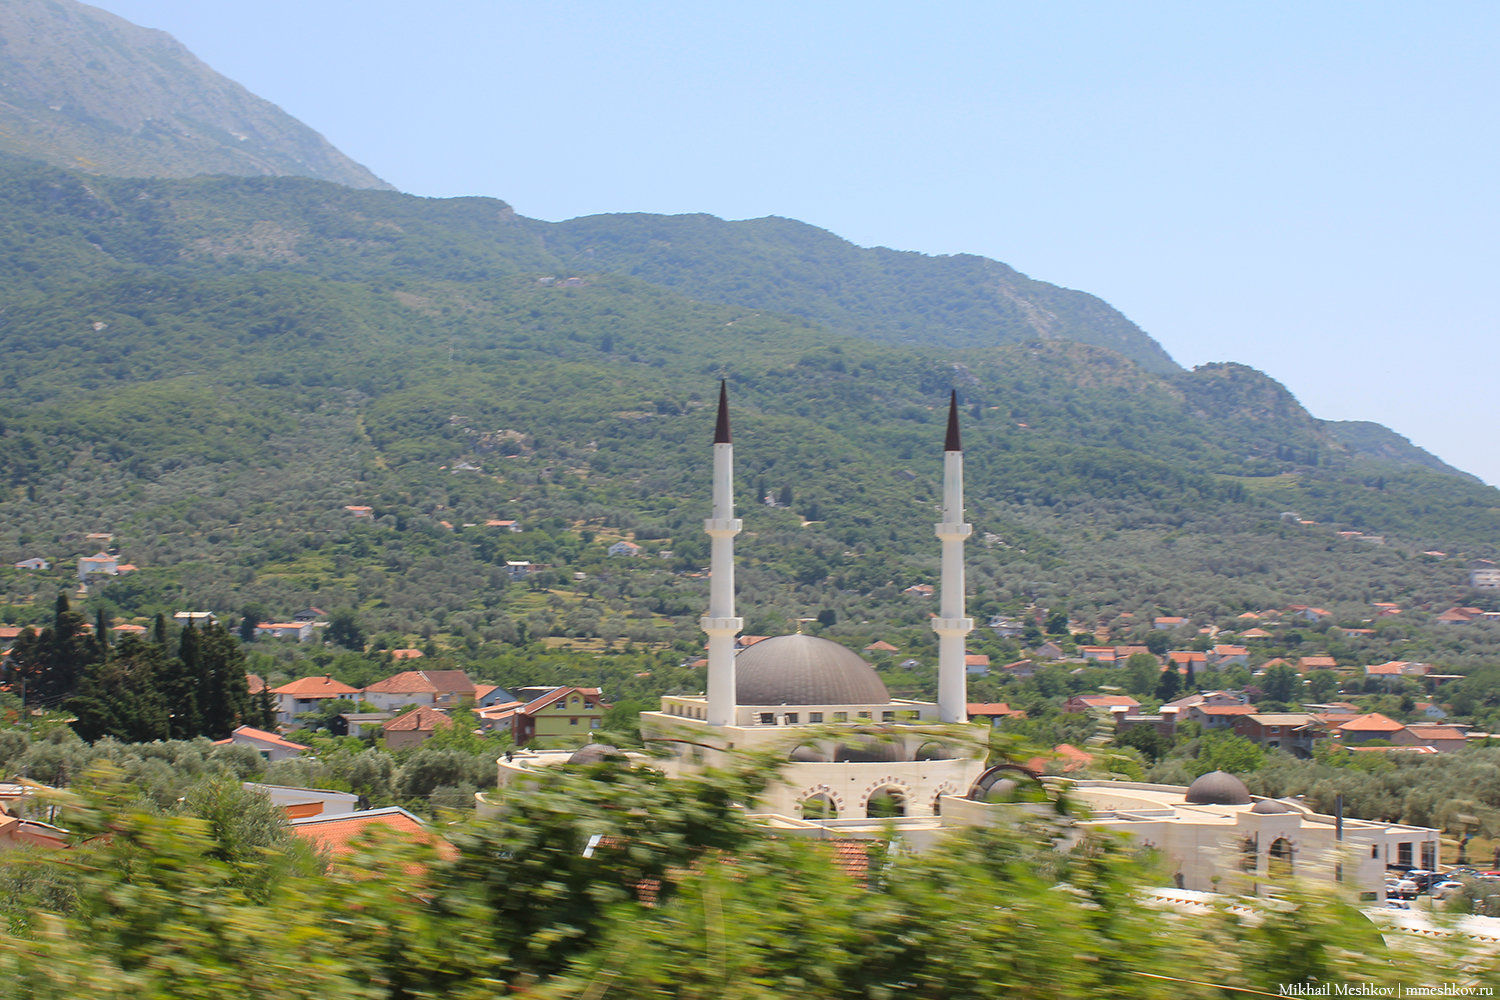 Старый Бар, Черногория